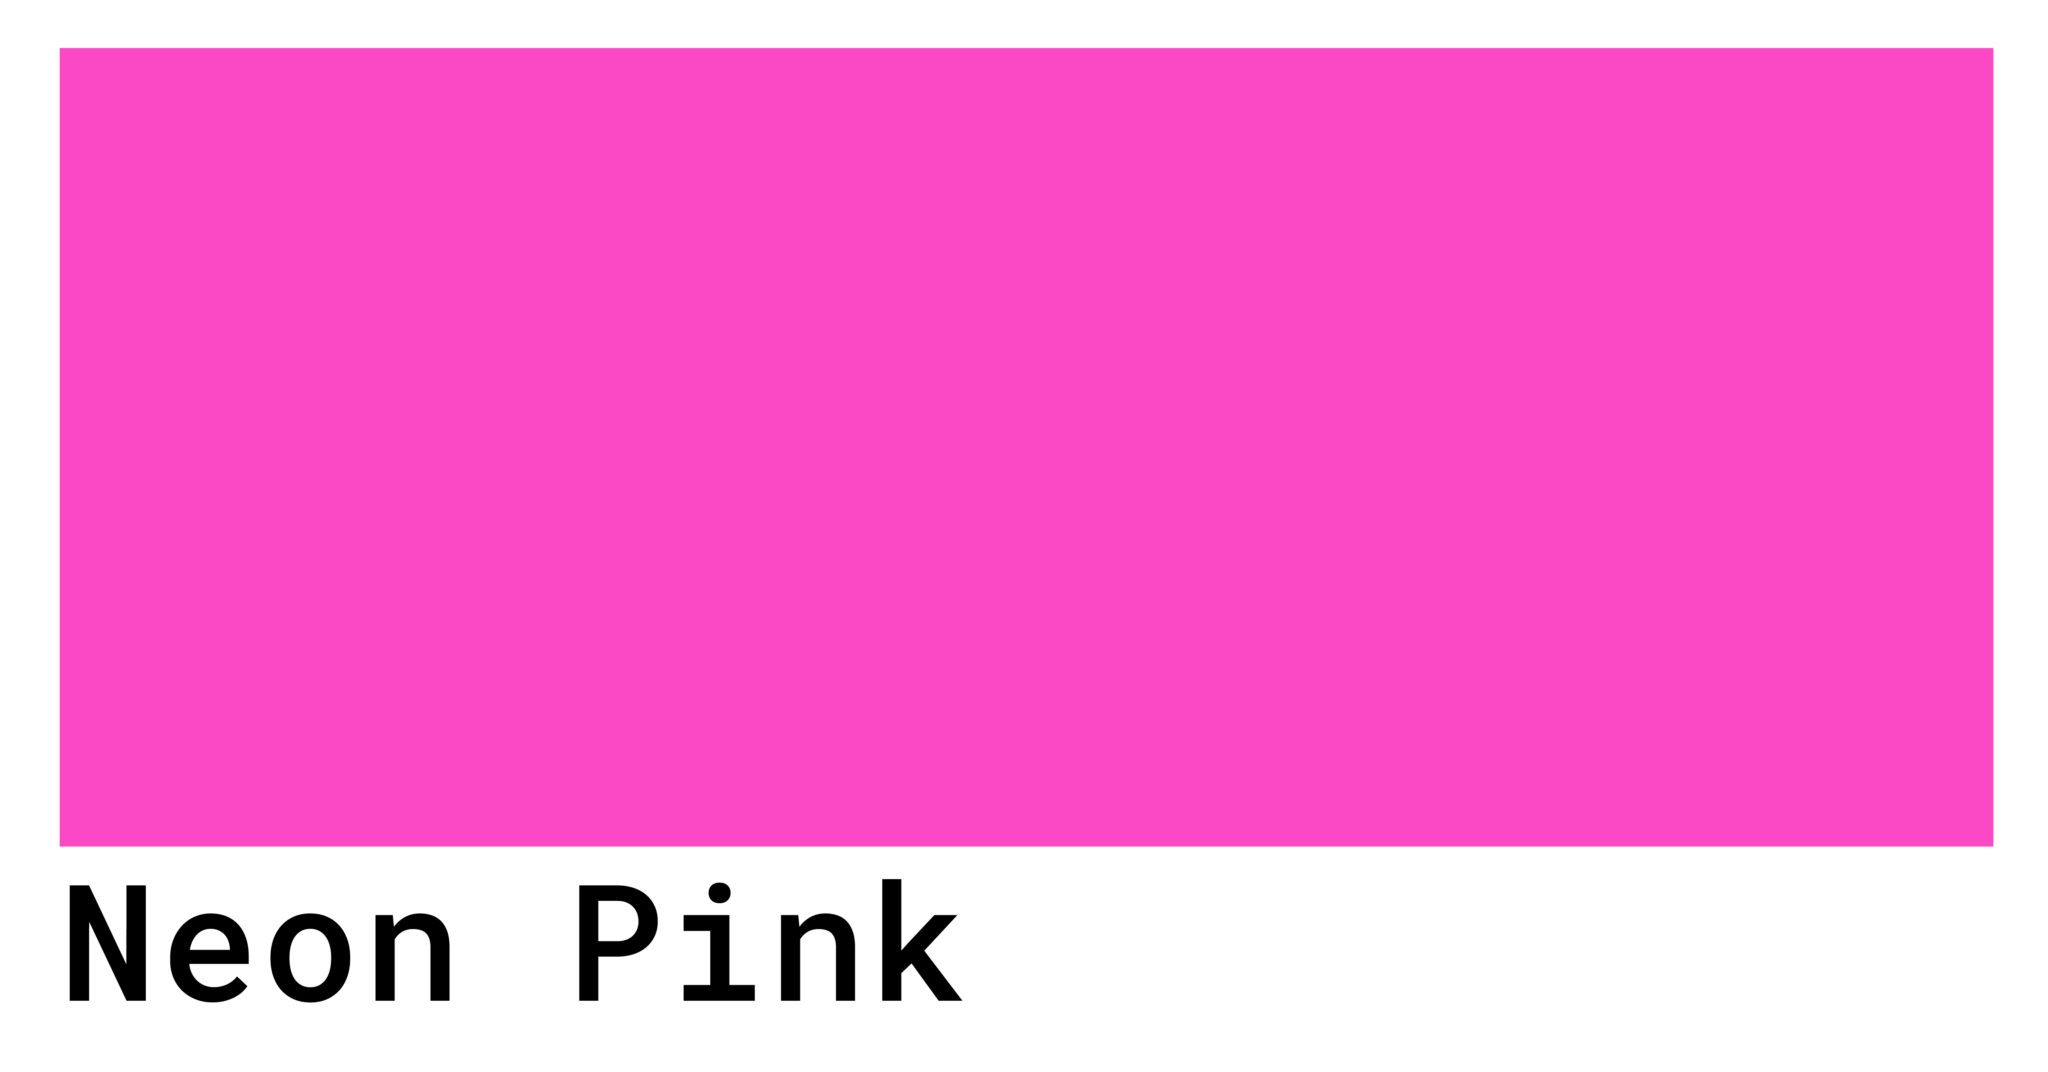 pink-pantone-color-swatch-pack-sticker-by-jadeillustrates-ubicaciondepersonas-cdmx-gob-mx